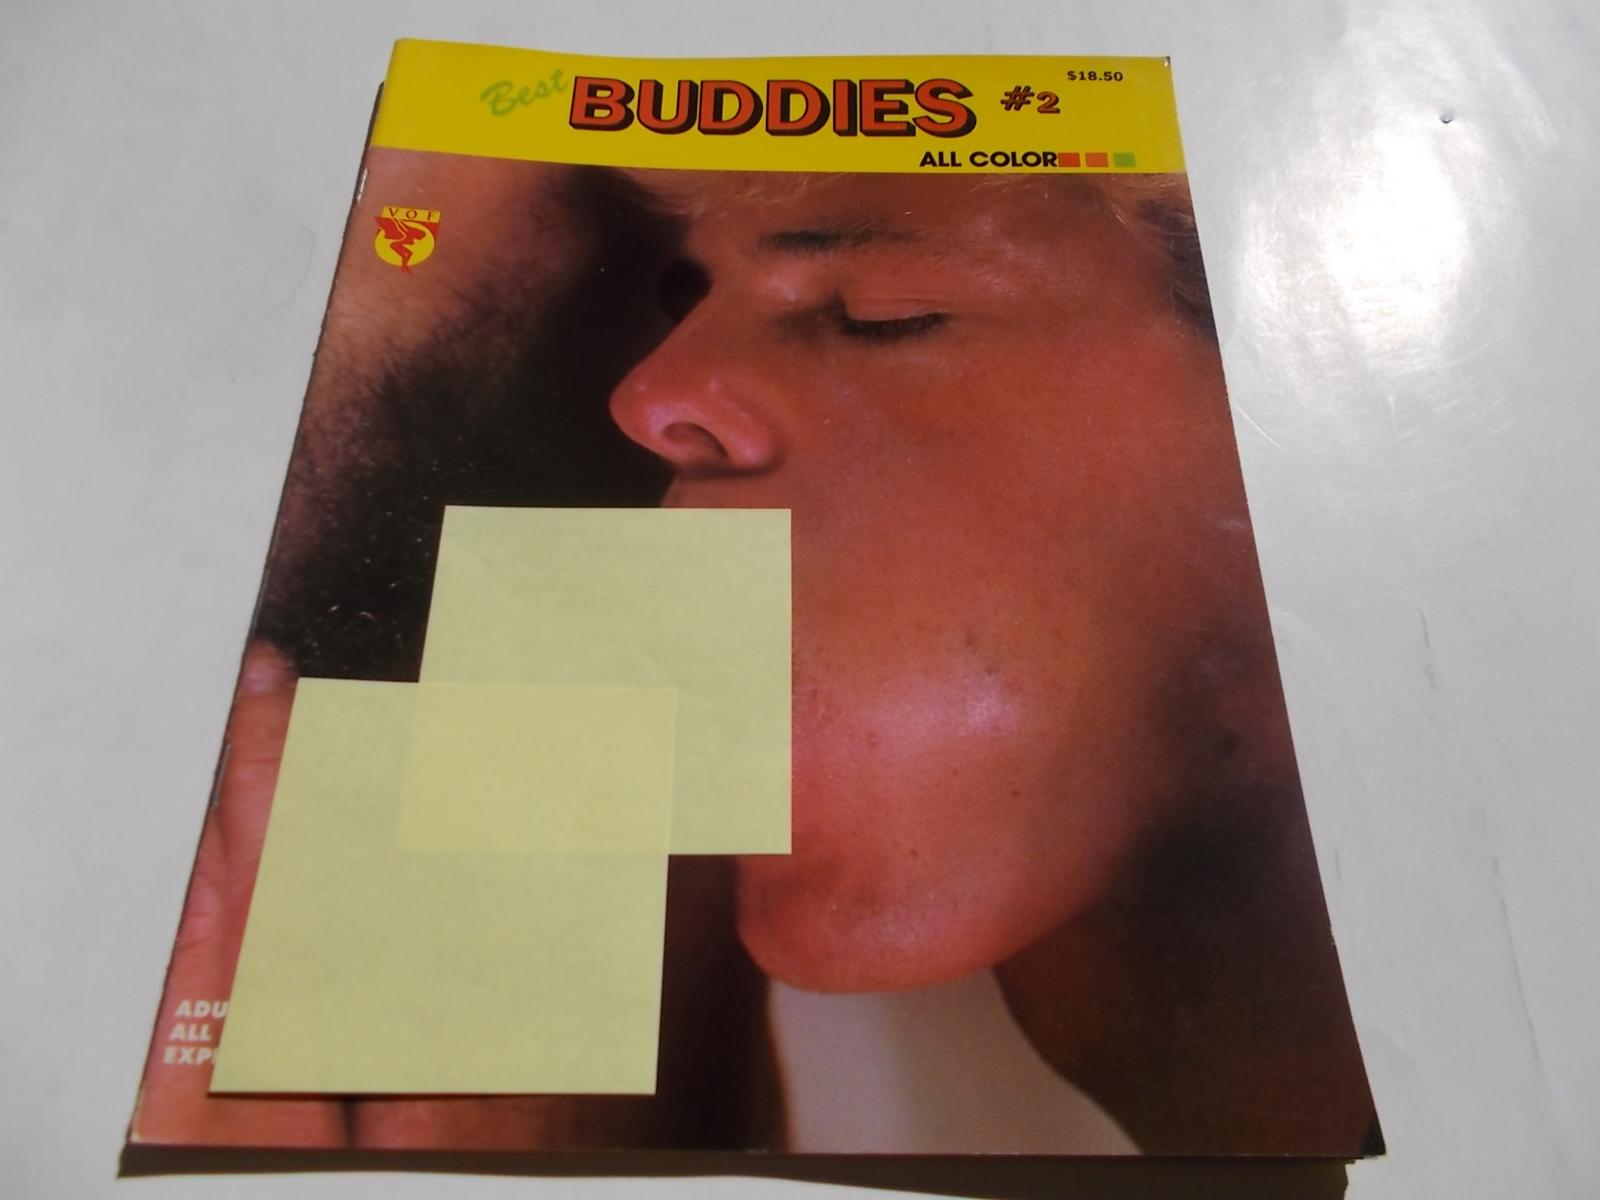 BEST BUDDIES #2 (Gay Male Porn Adult Erotic ...